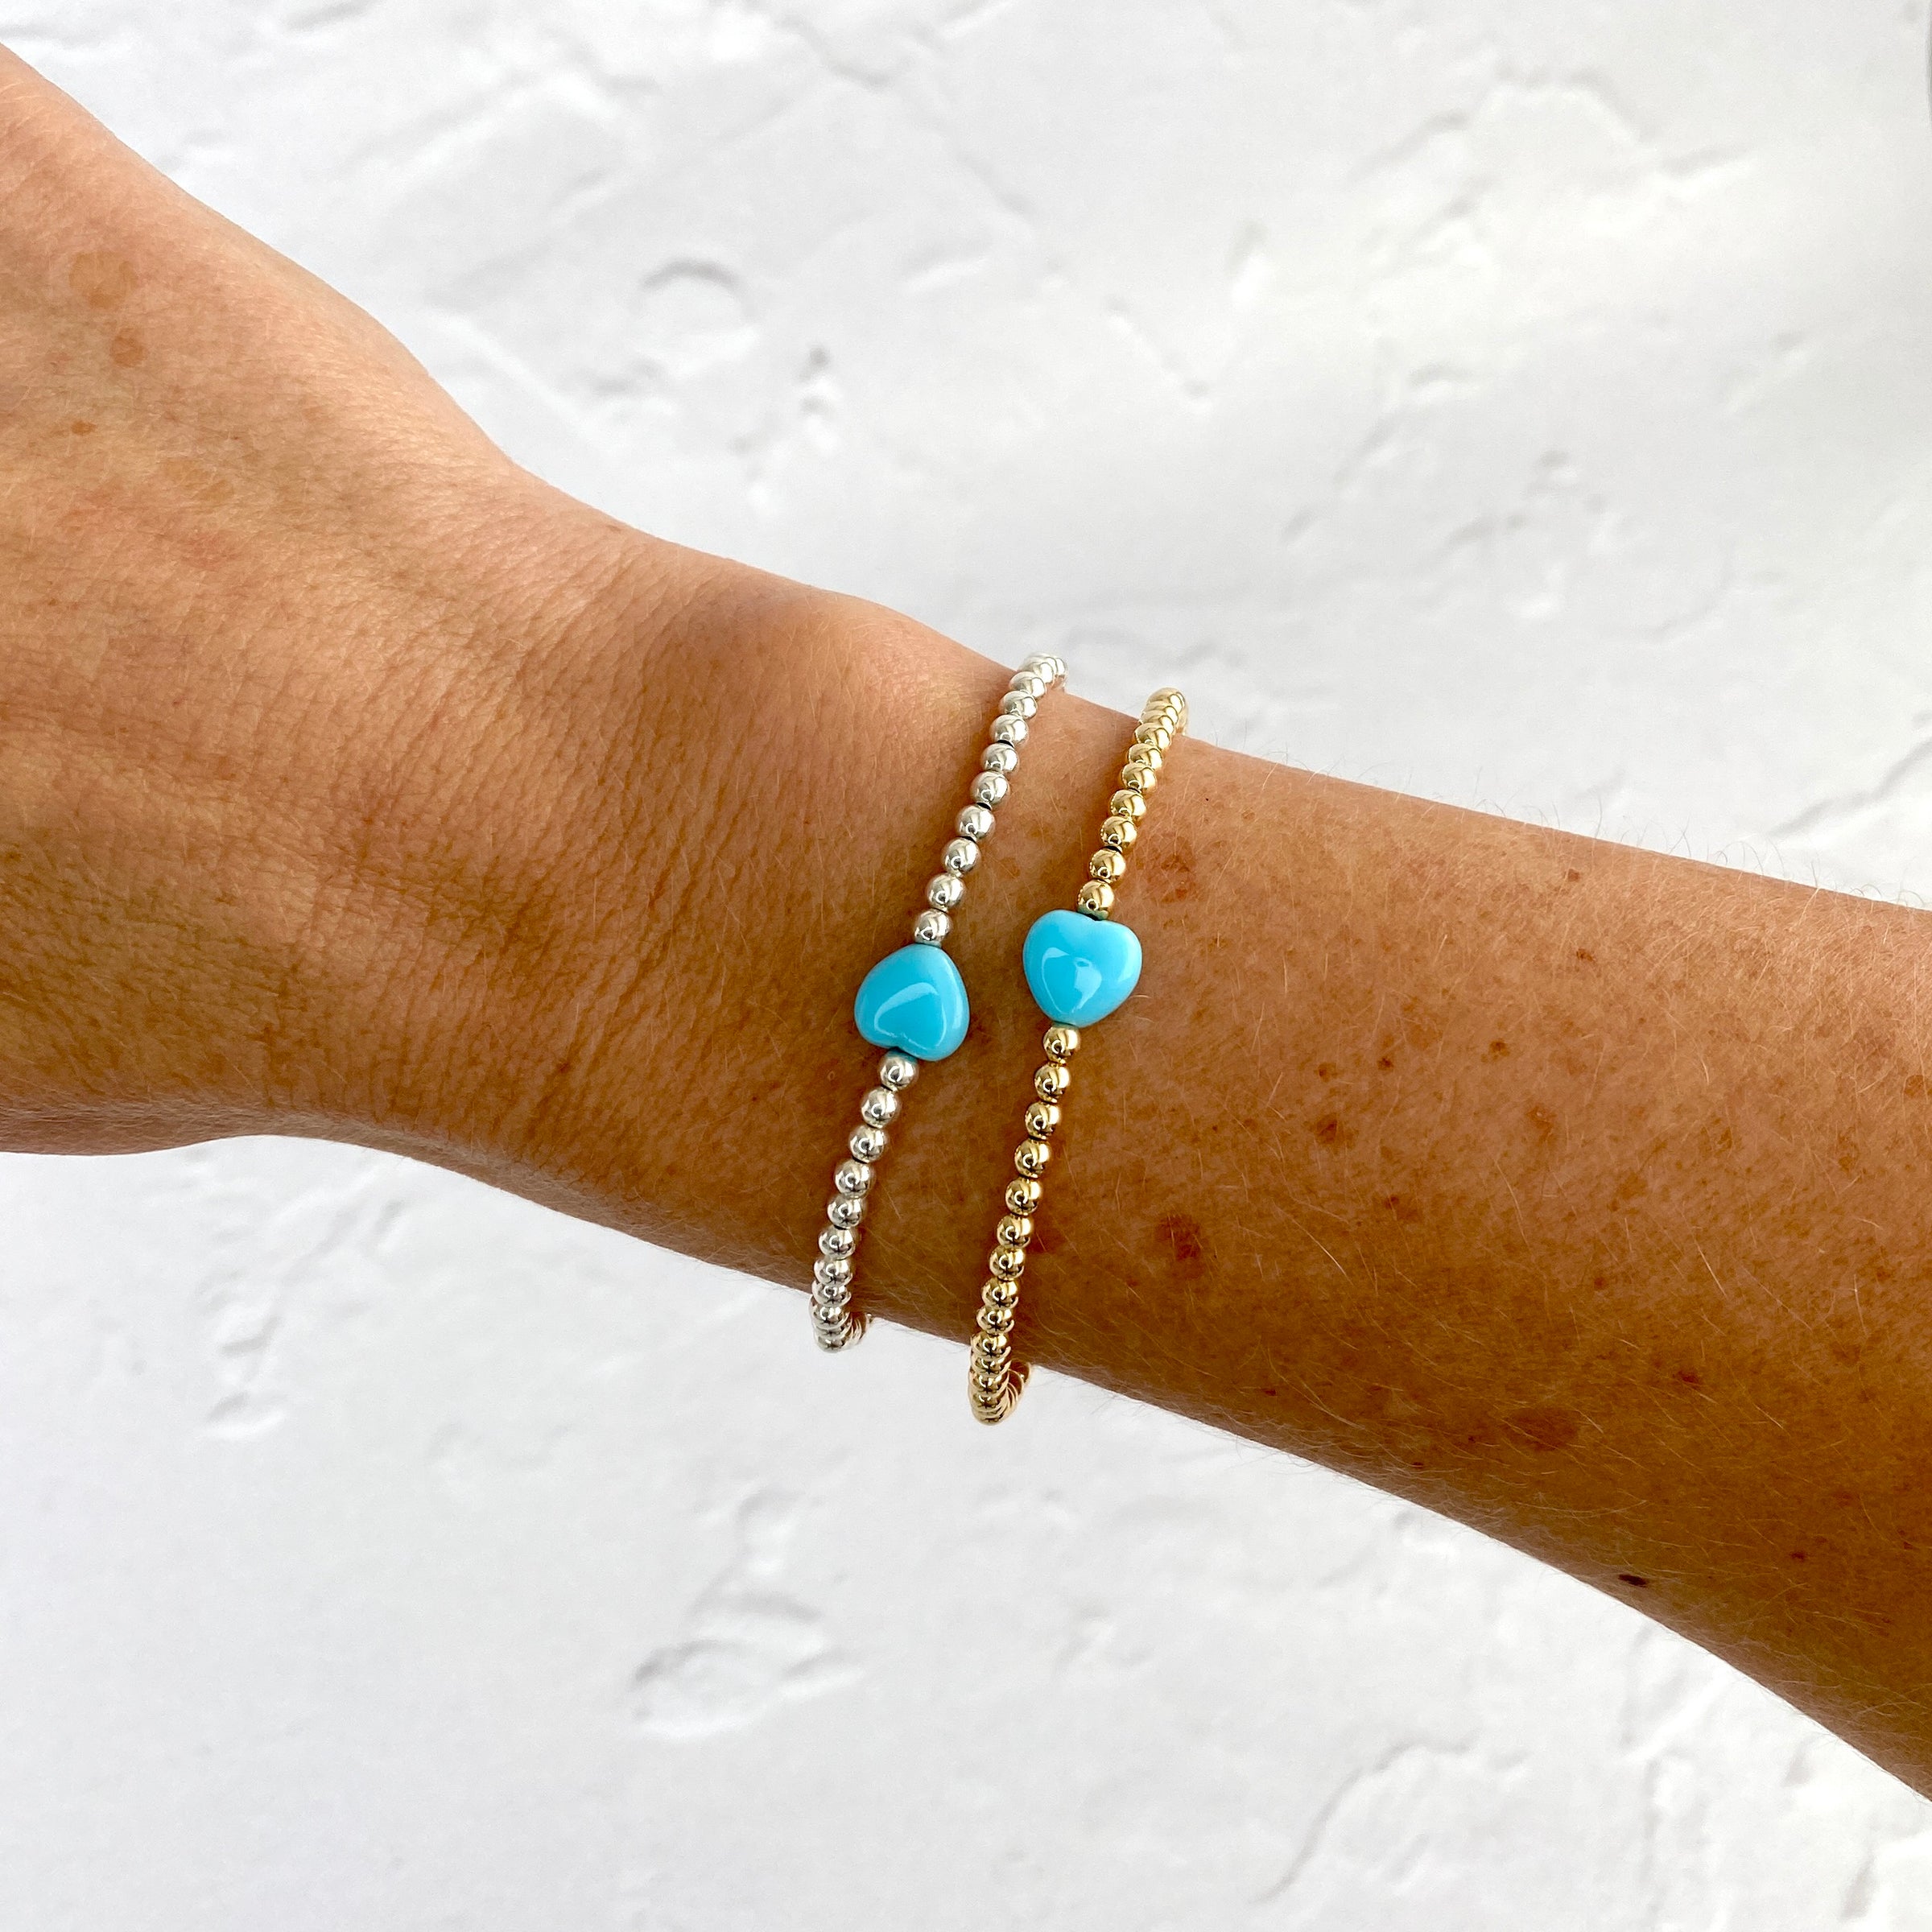 Share more than 147 blue bracelet uk latest